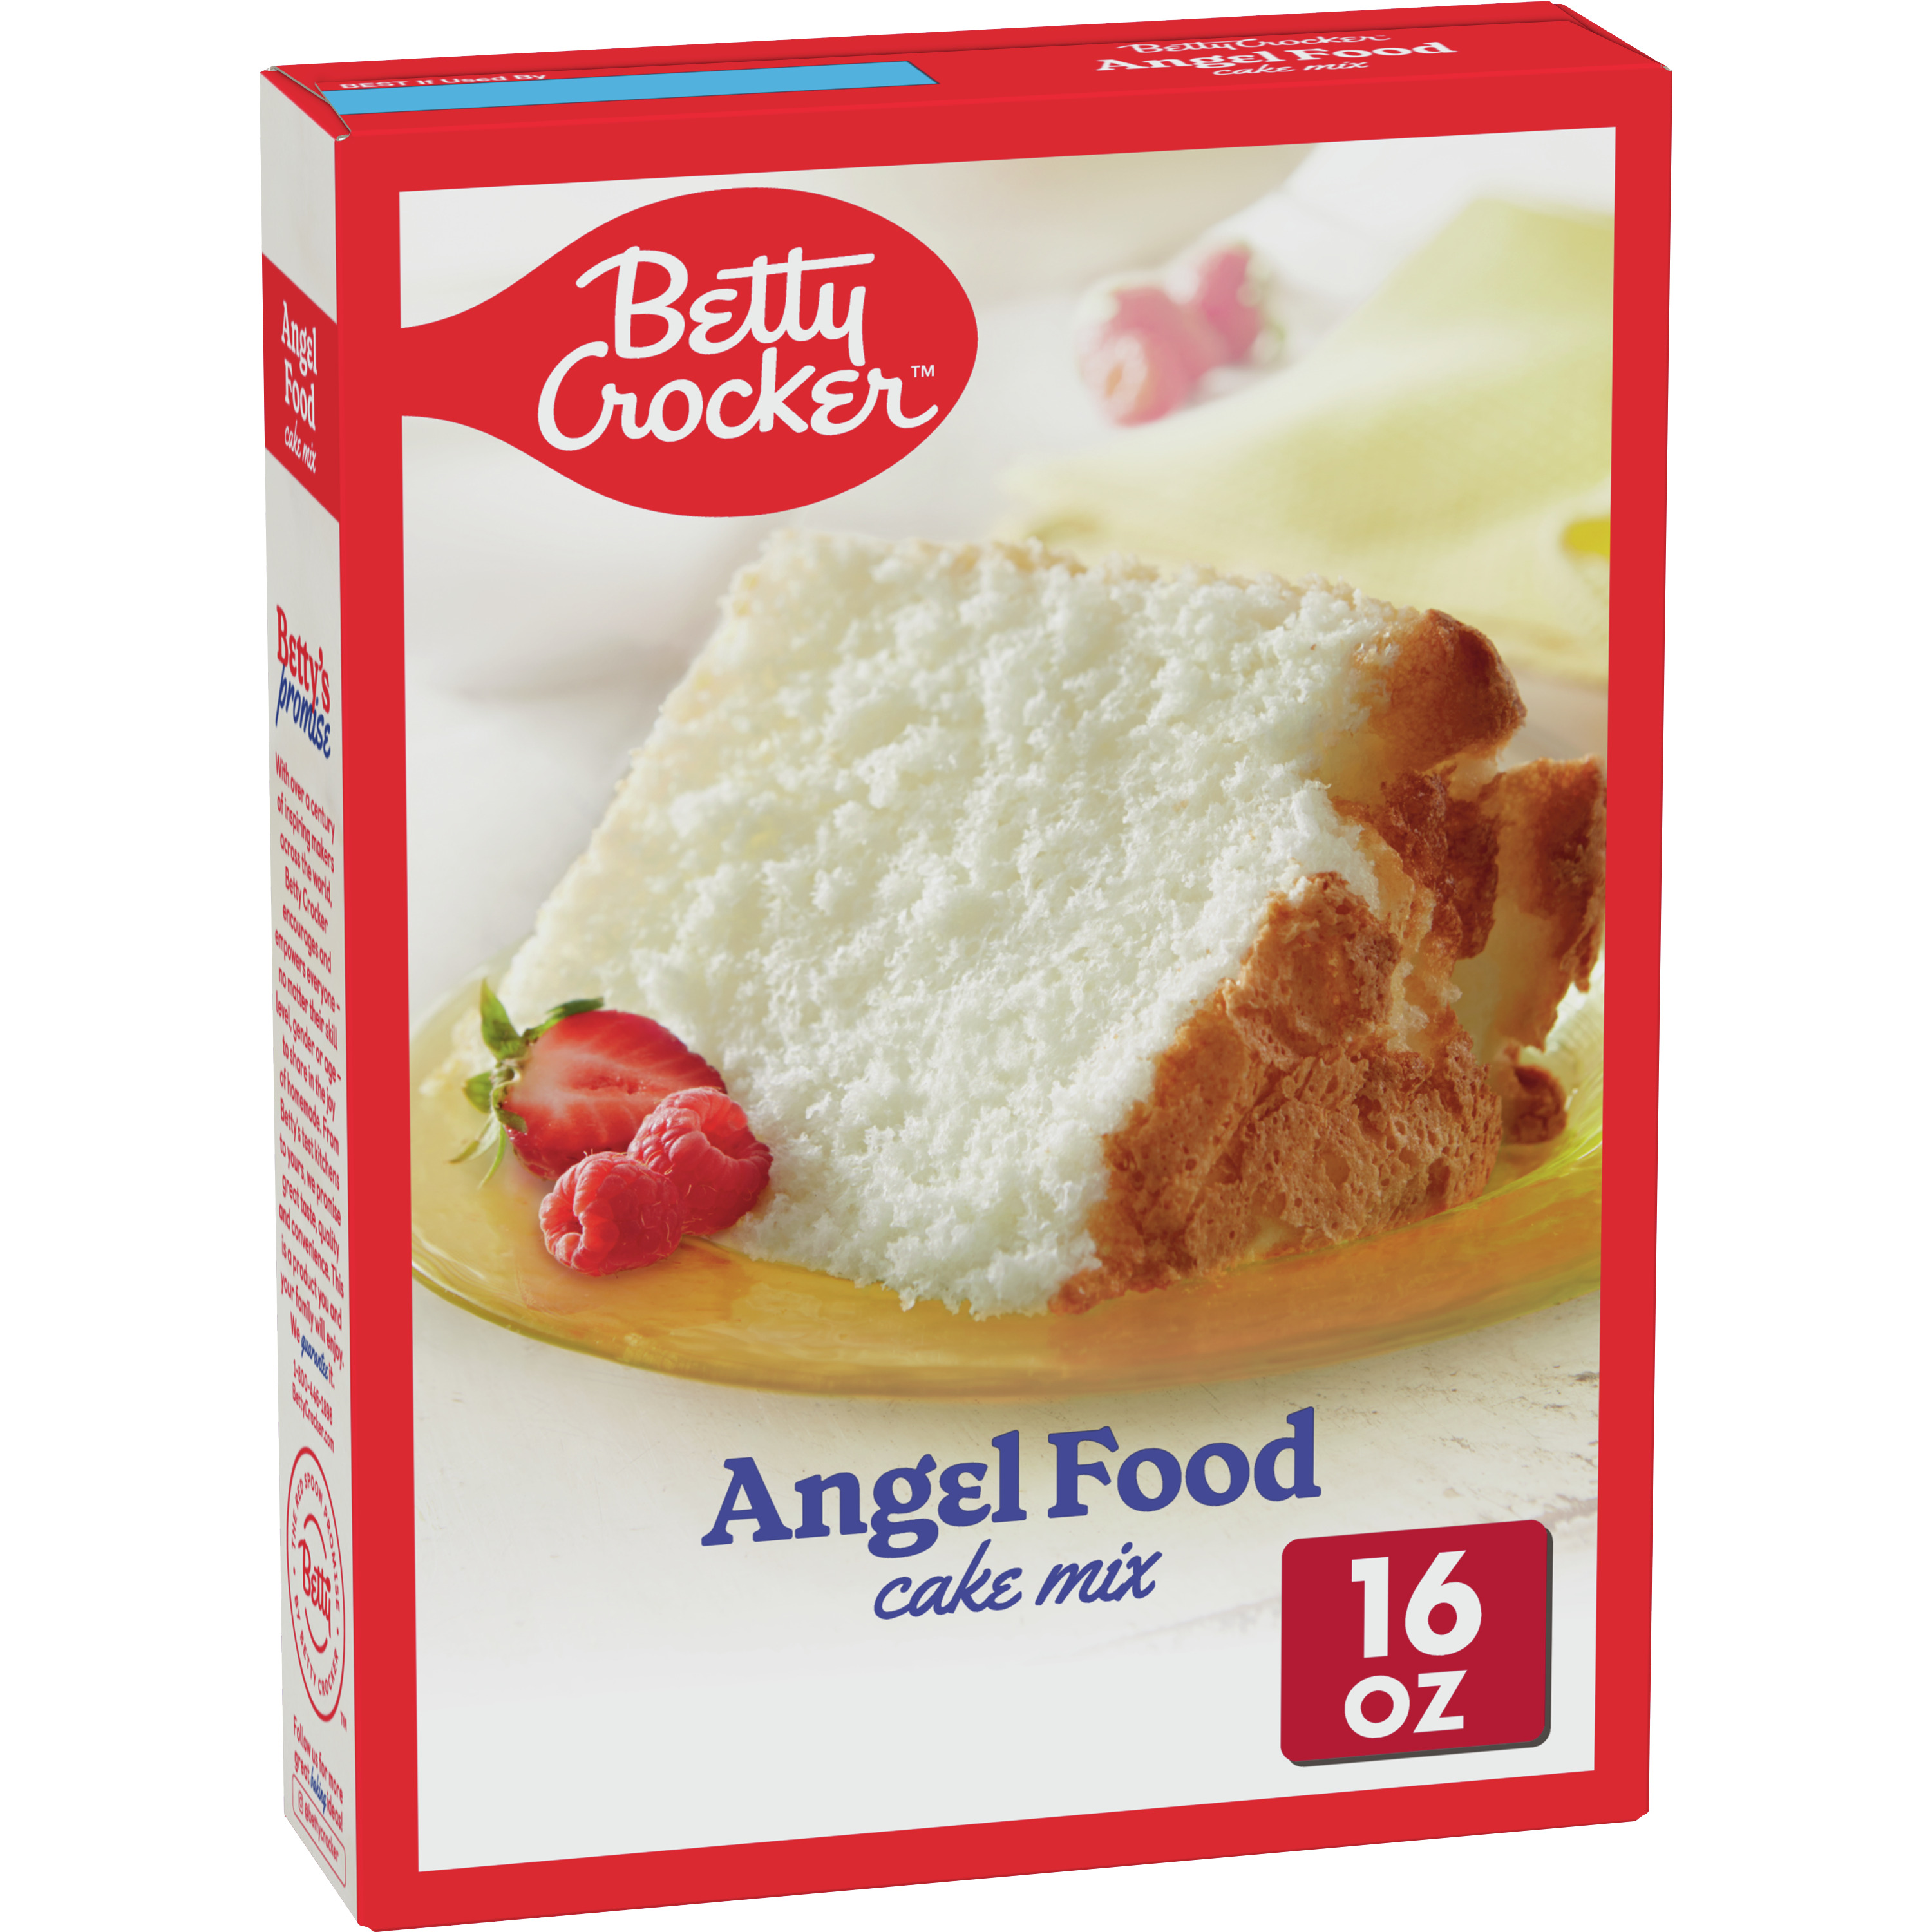 Betty Crocker Ready to Bake Angel Food Cake Mix, 16 oz. - image 1 of 9